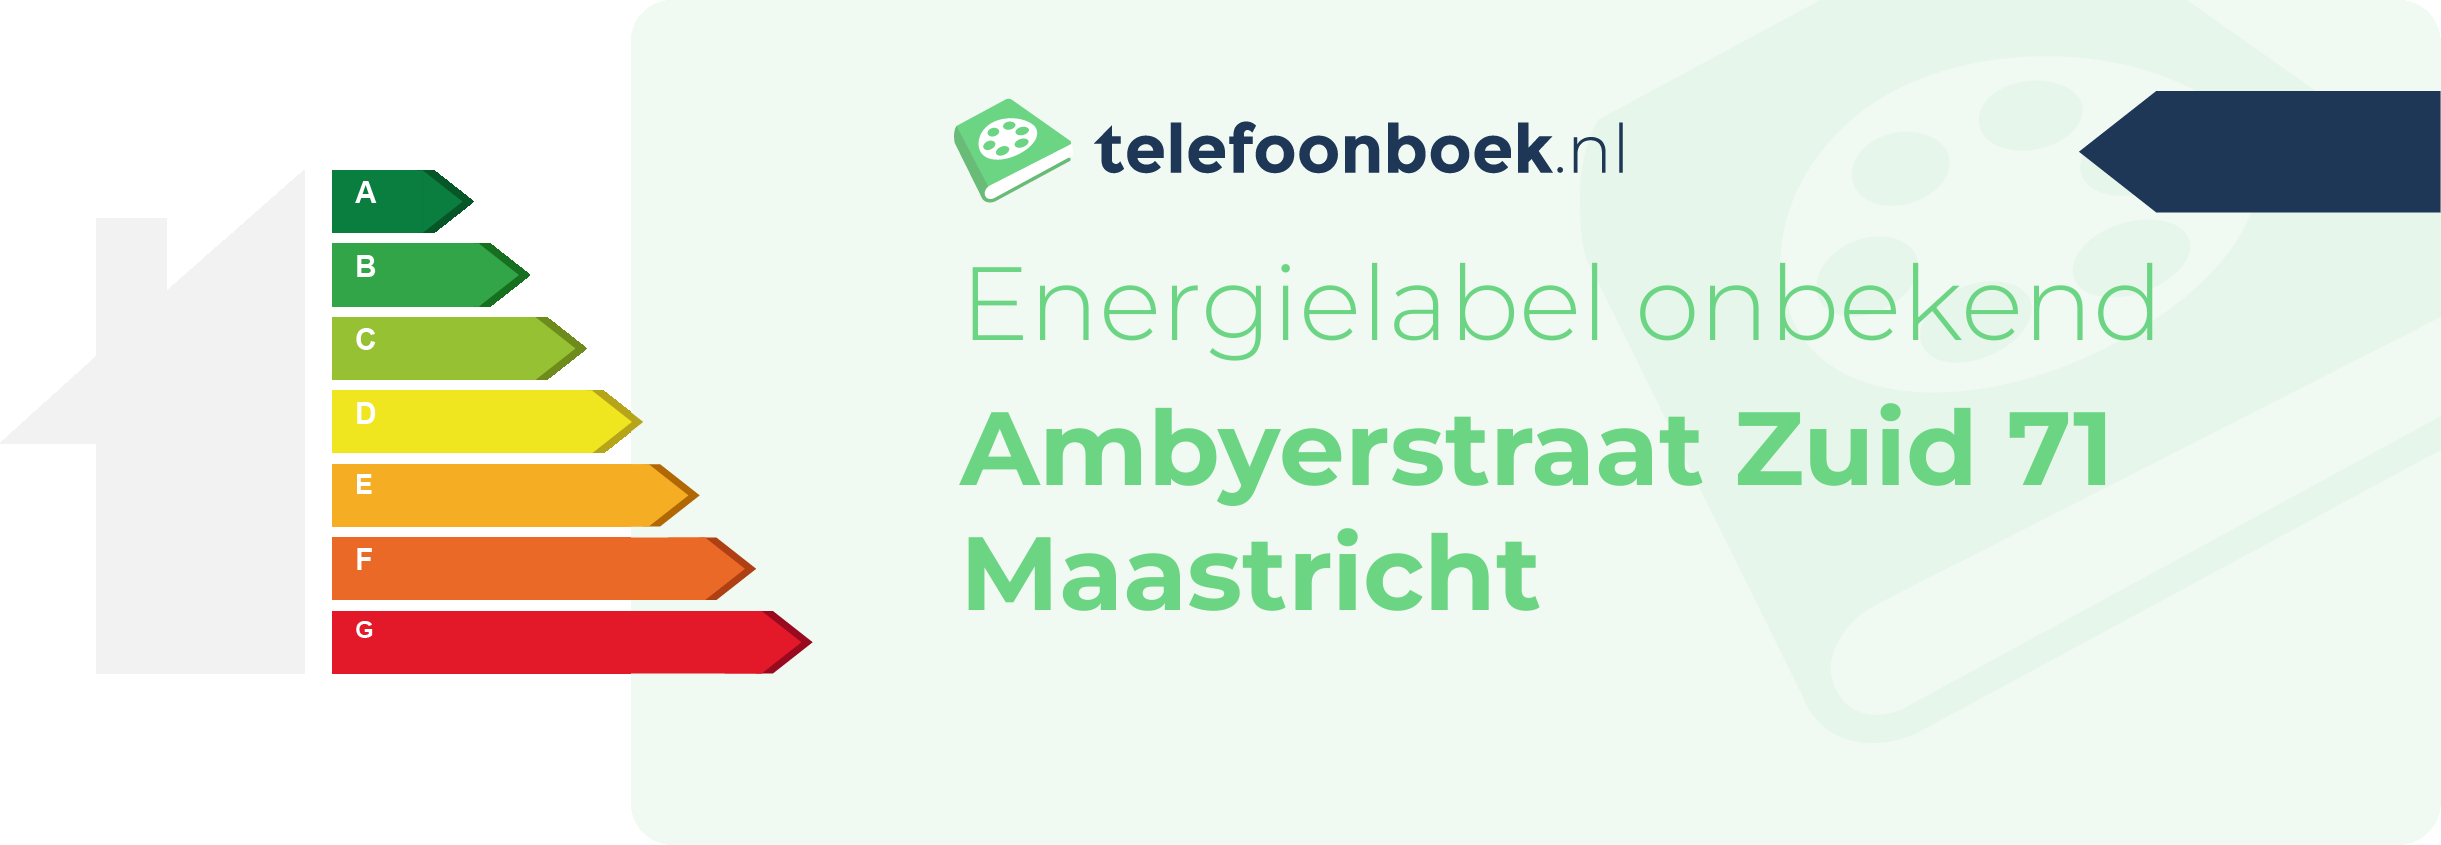 Energielabel Ambyerstraat Zuid 71 Maastricht